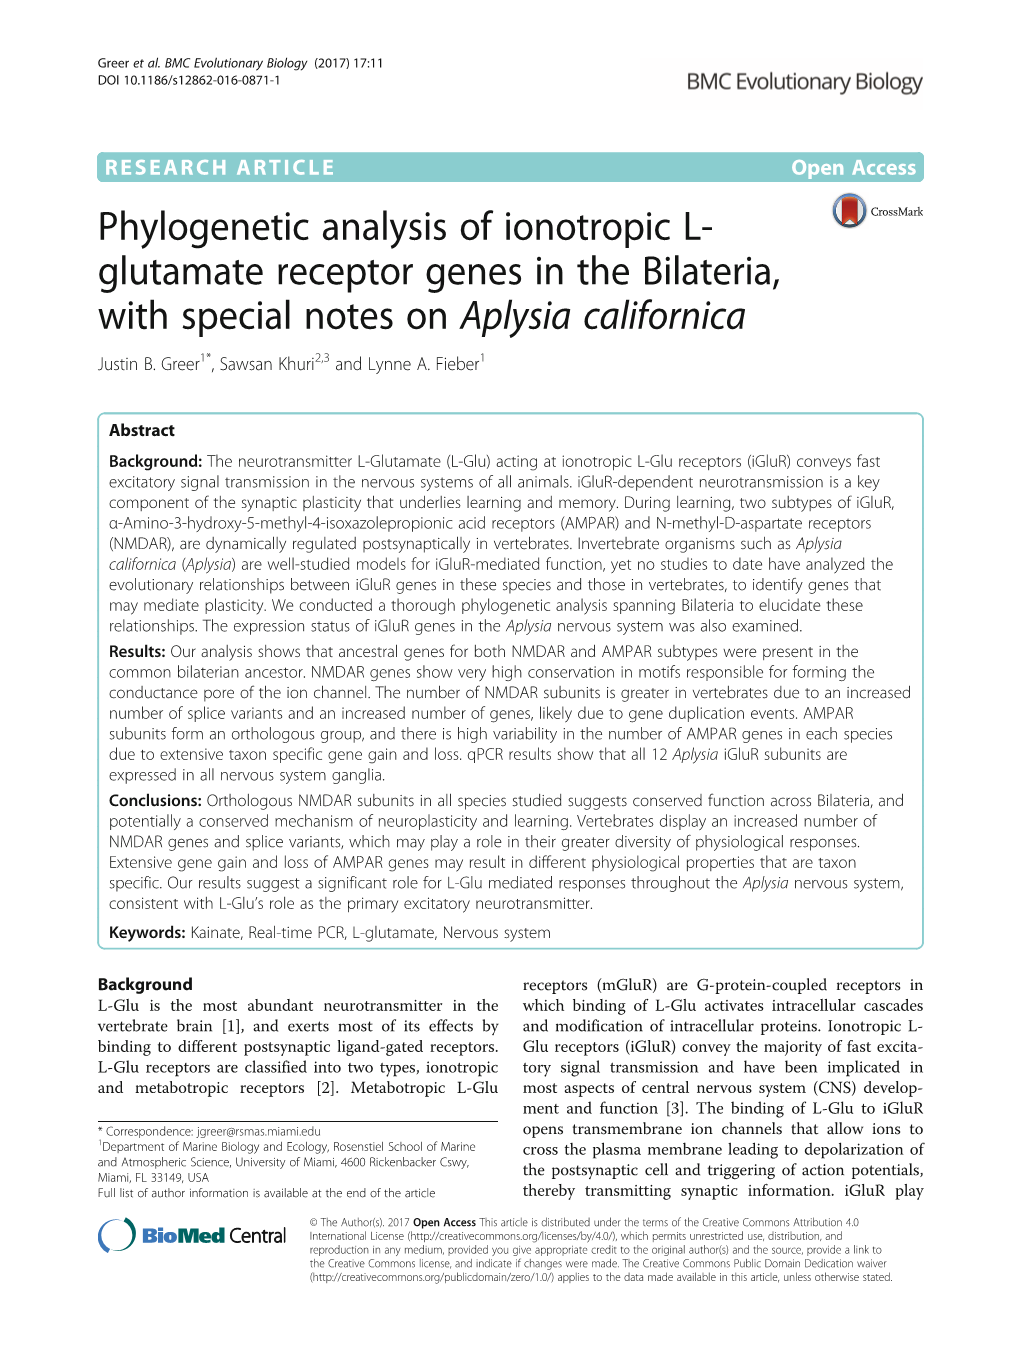 Phylogenetic Analysis of Ionotropic L-Glutamate Receptor Genes in The